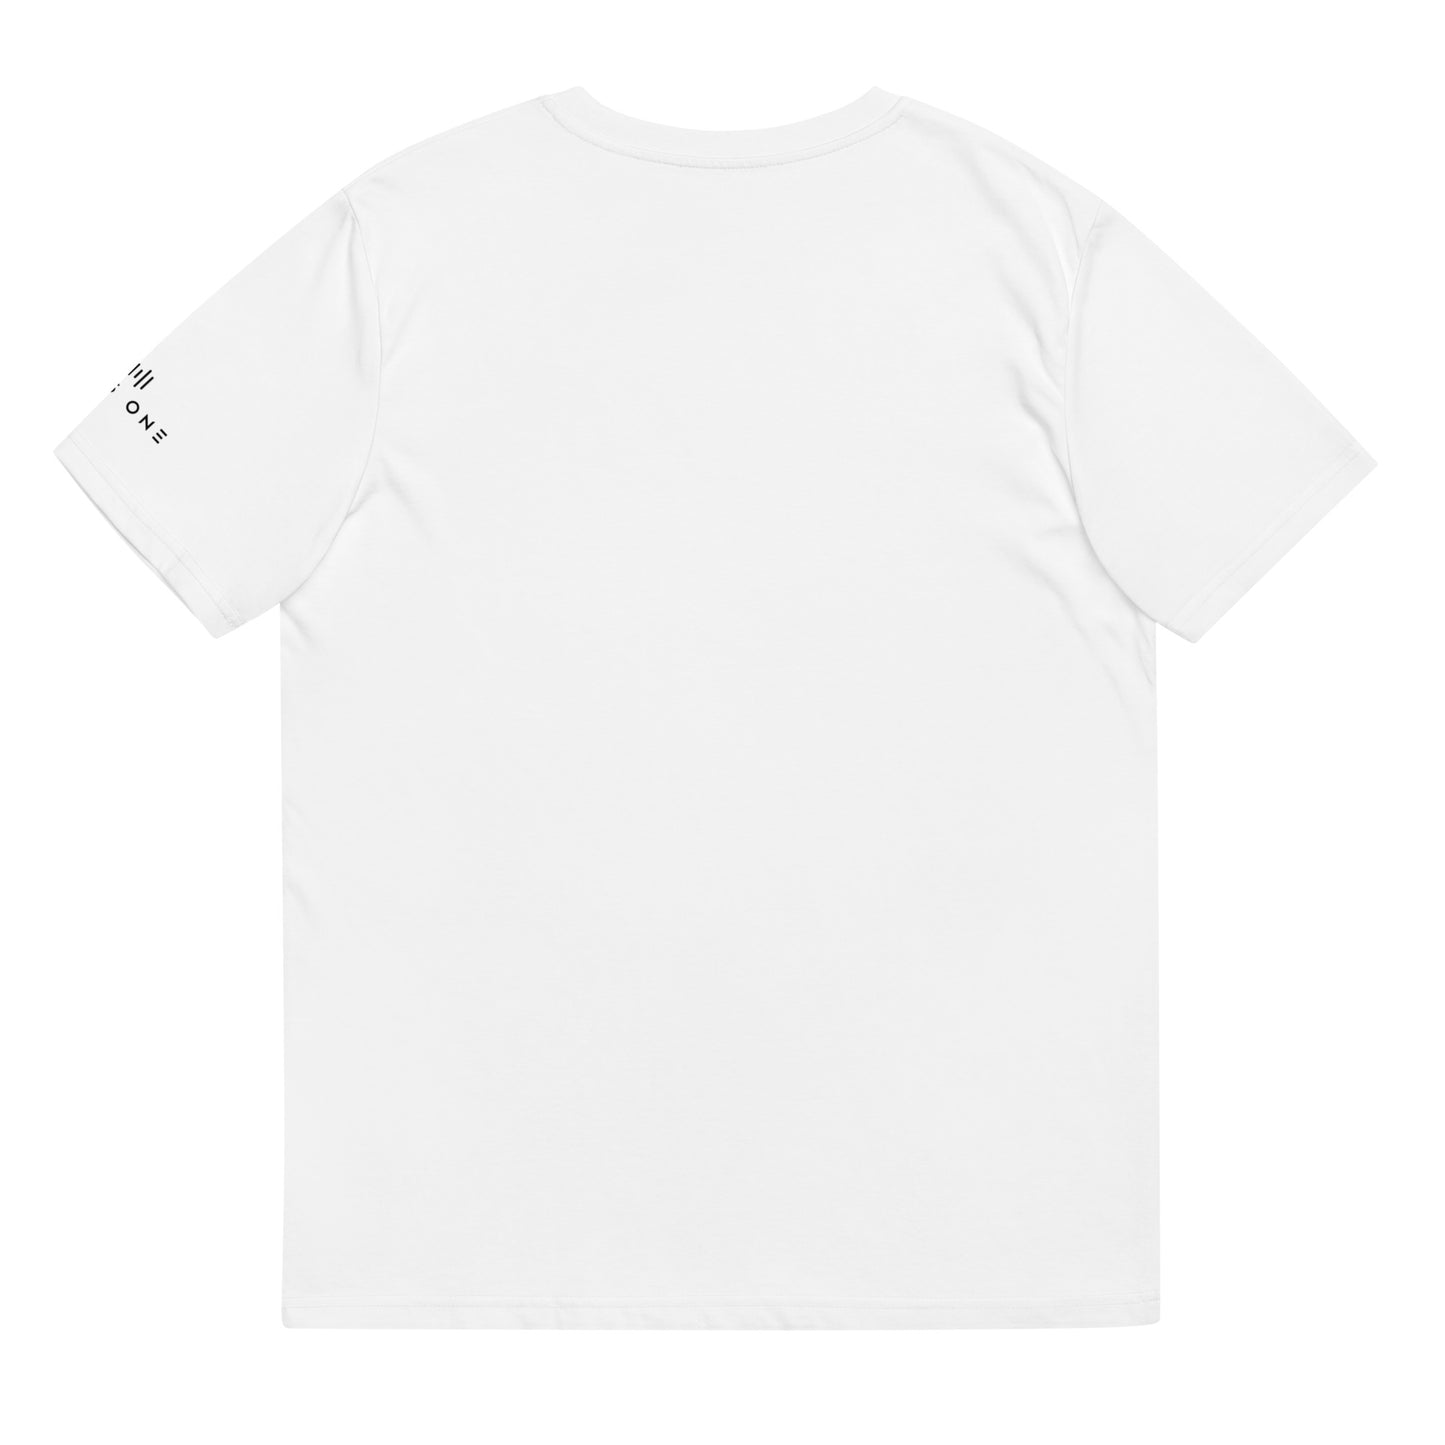 SK8 (v3) Unisex organic cotton t-shirt